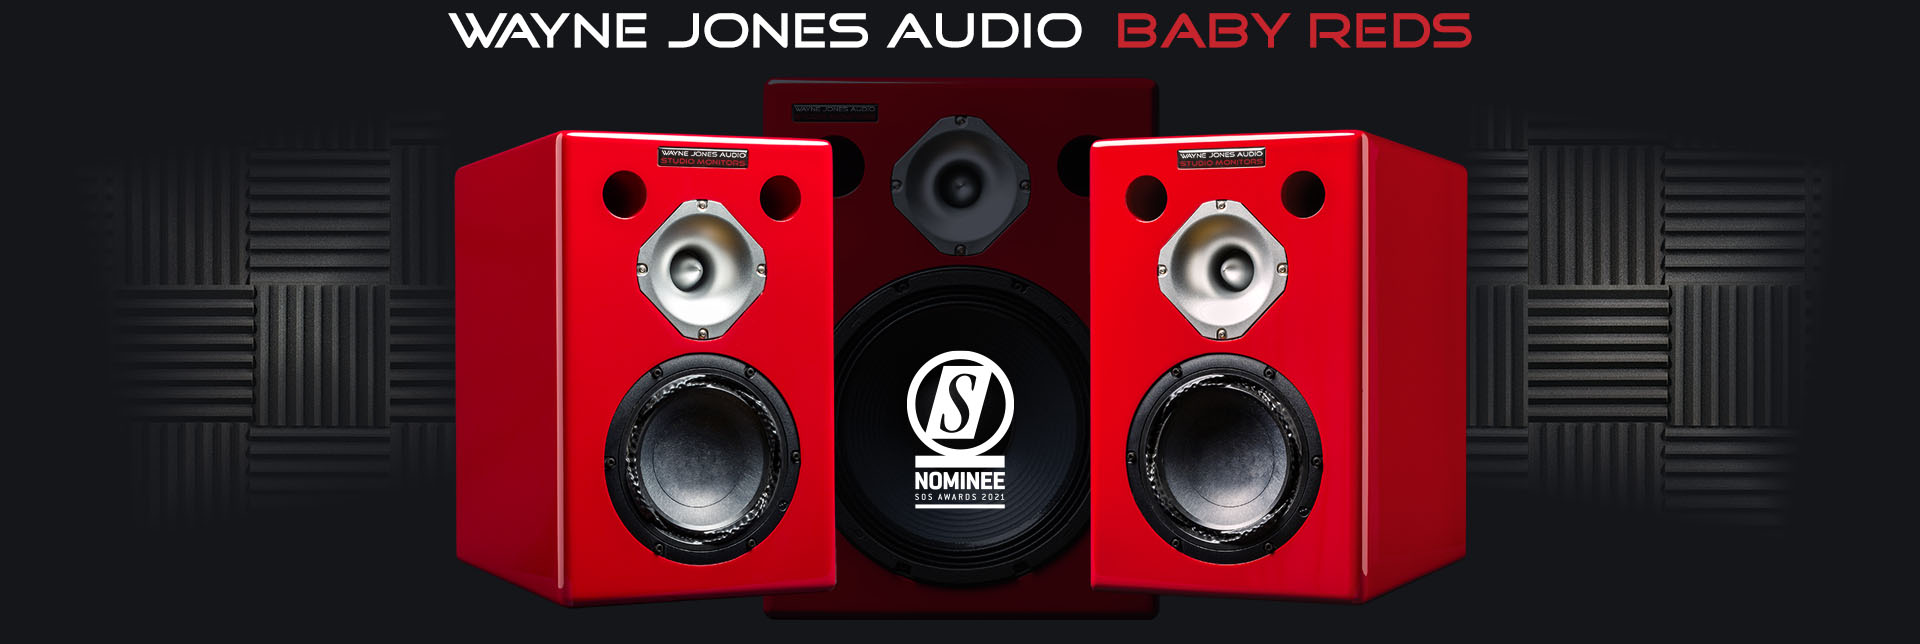 Wayne Jones Audio Studio Monitors - recording engineering, audio and film post production, sound track mastering, audio mixing, sound mixing, recording studio gear.